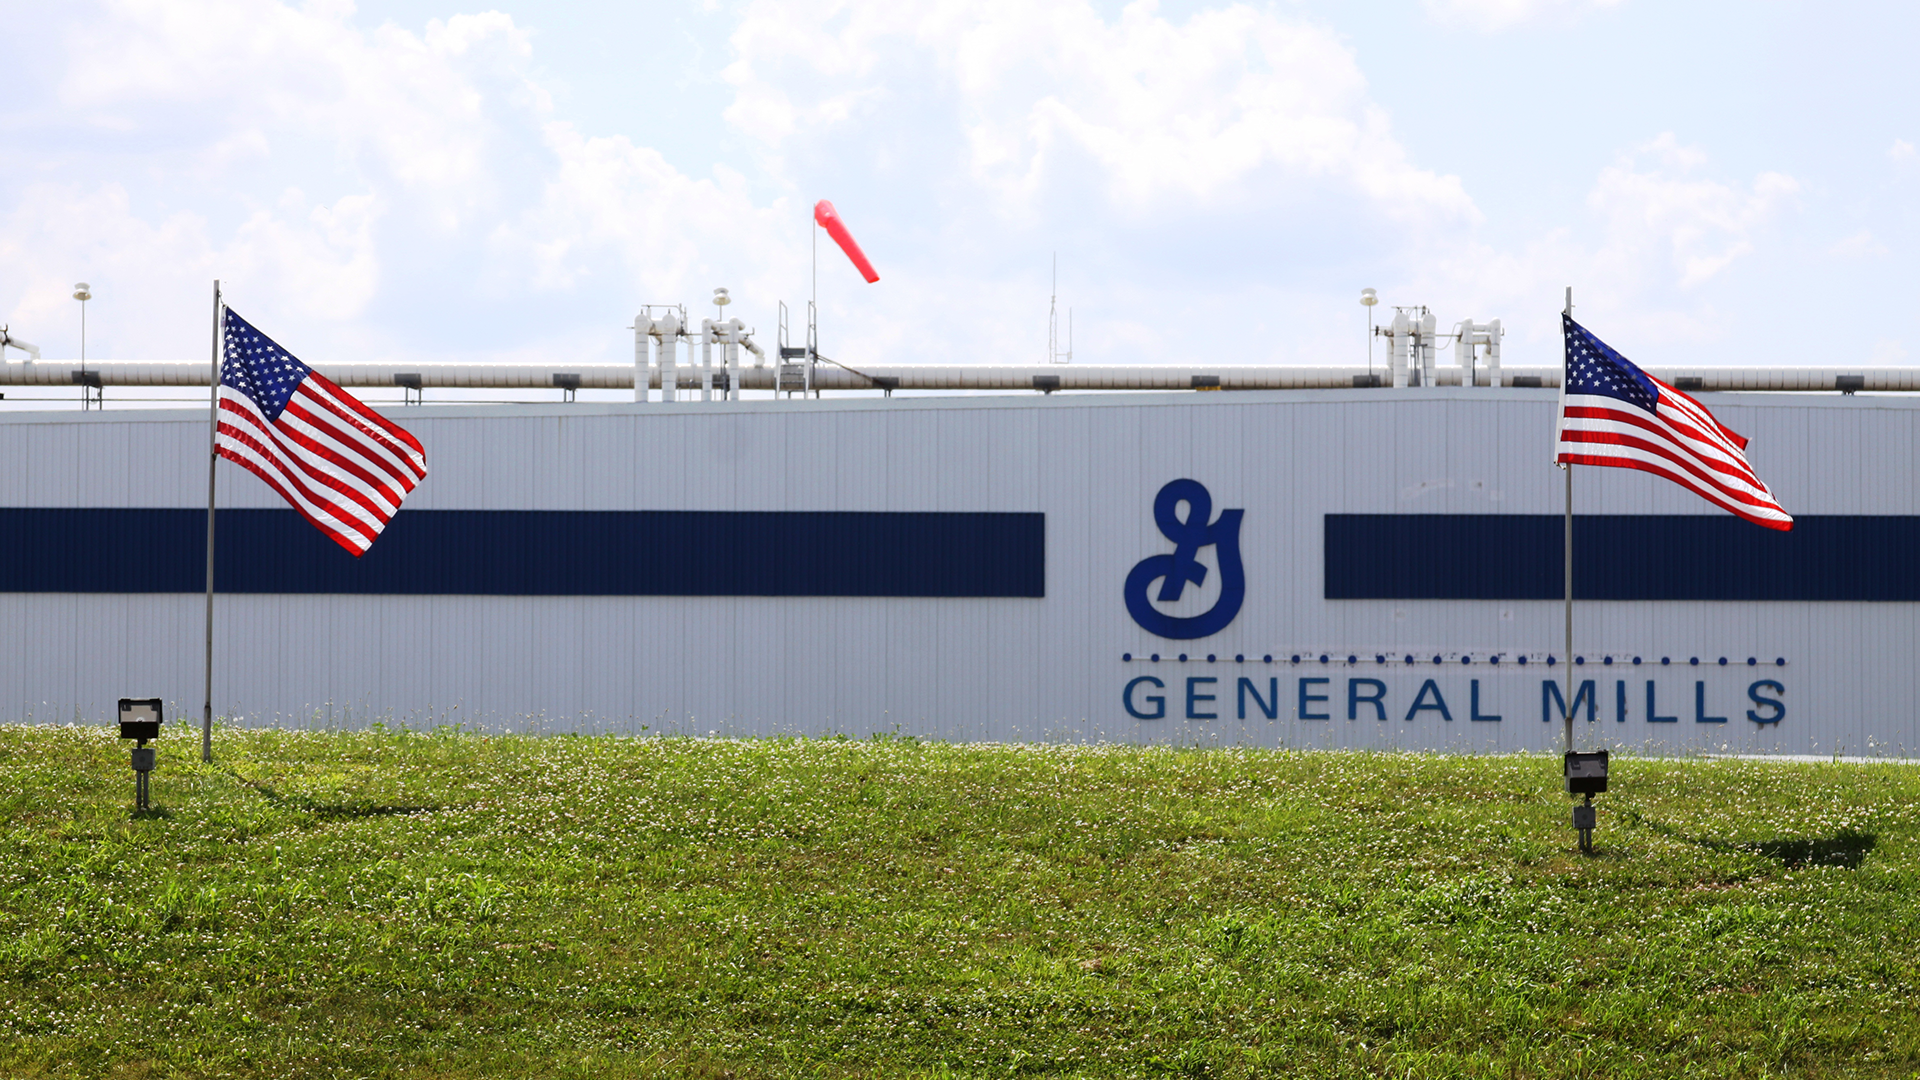 General Mills Wellston Plant building image